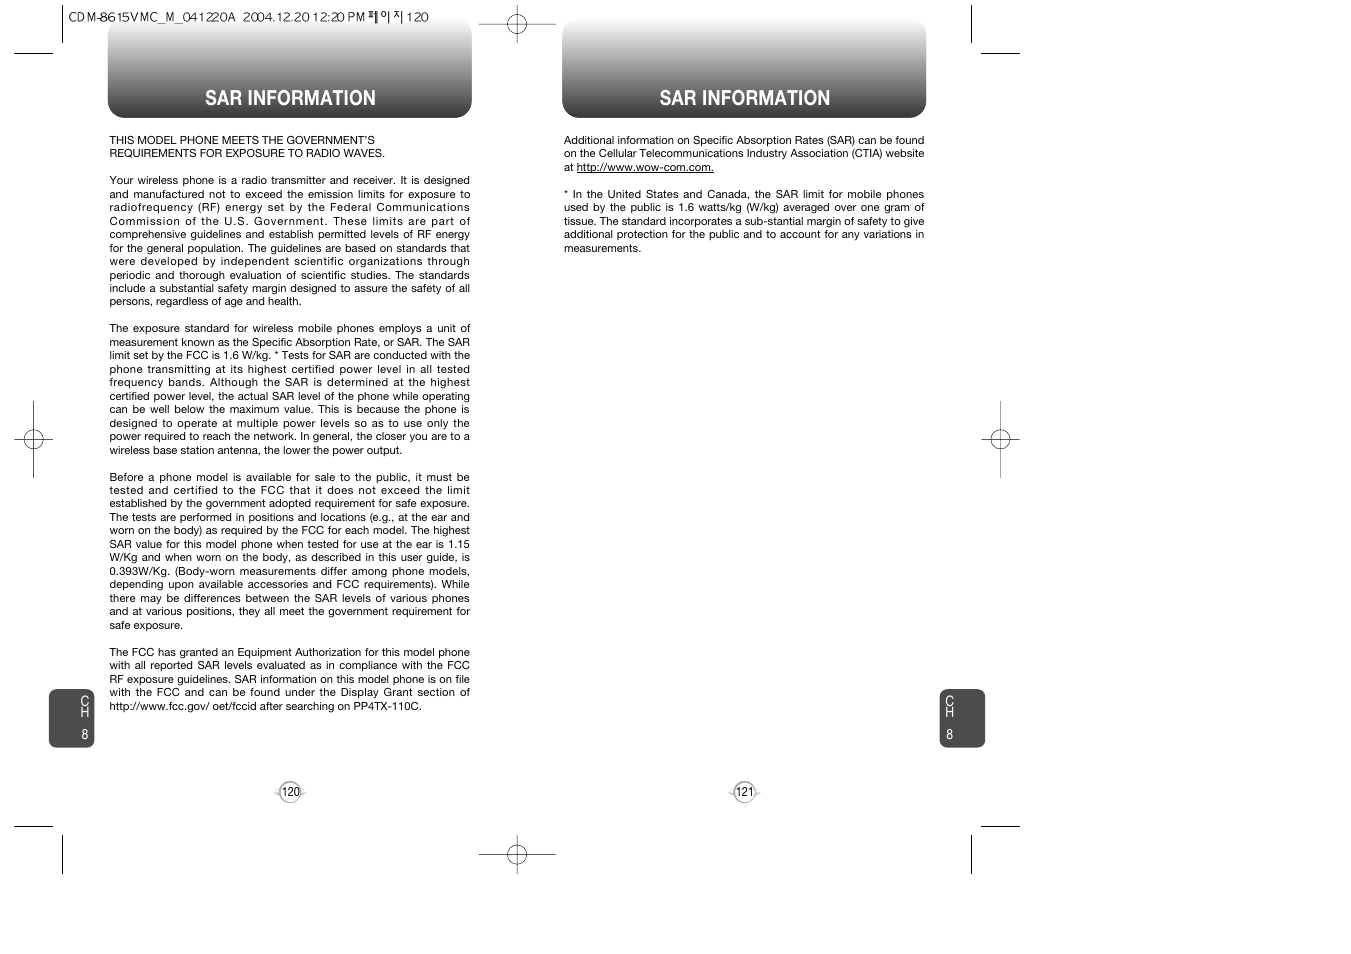 Sar information | UTStarcom CDM-8615 User Manual | Page 62 / 66